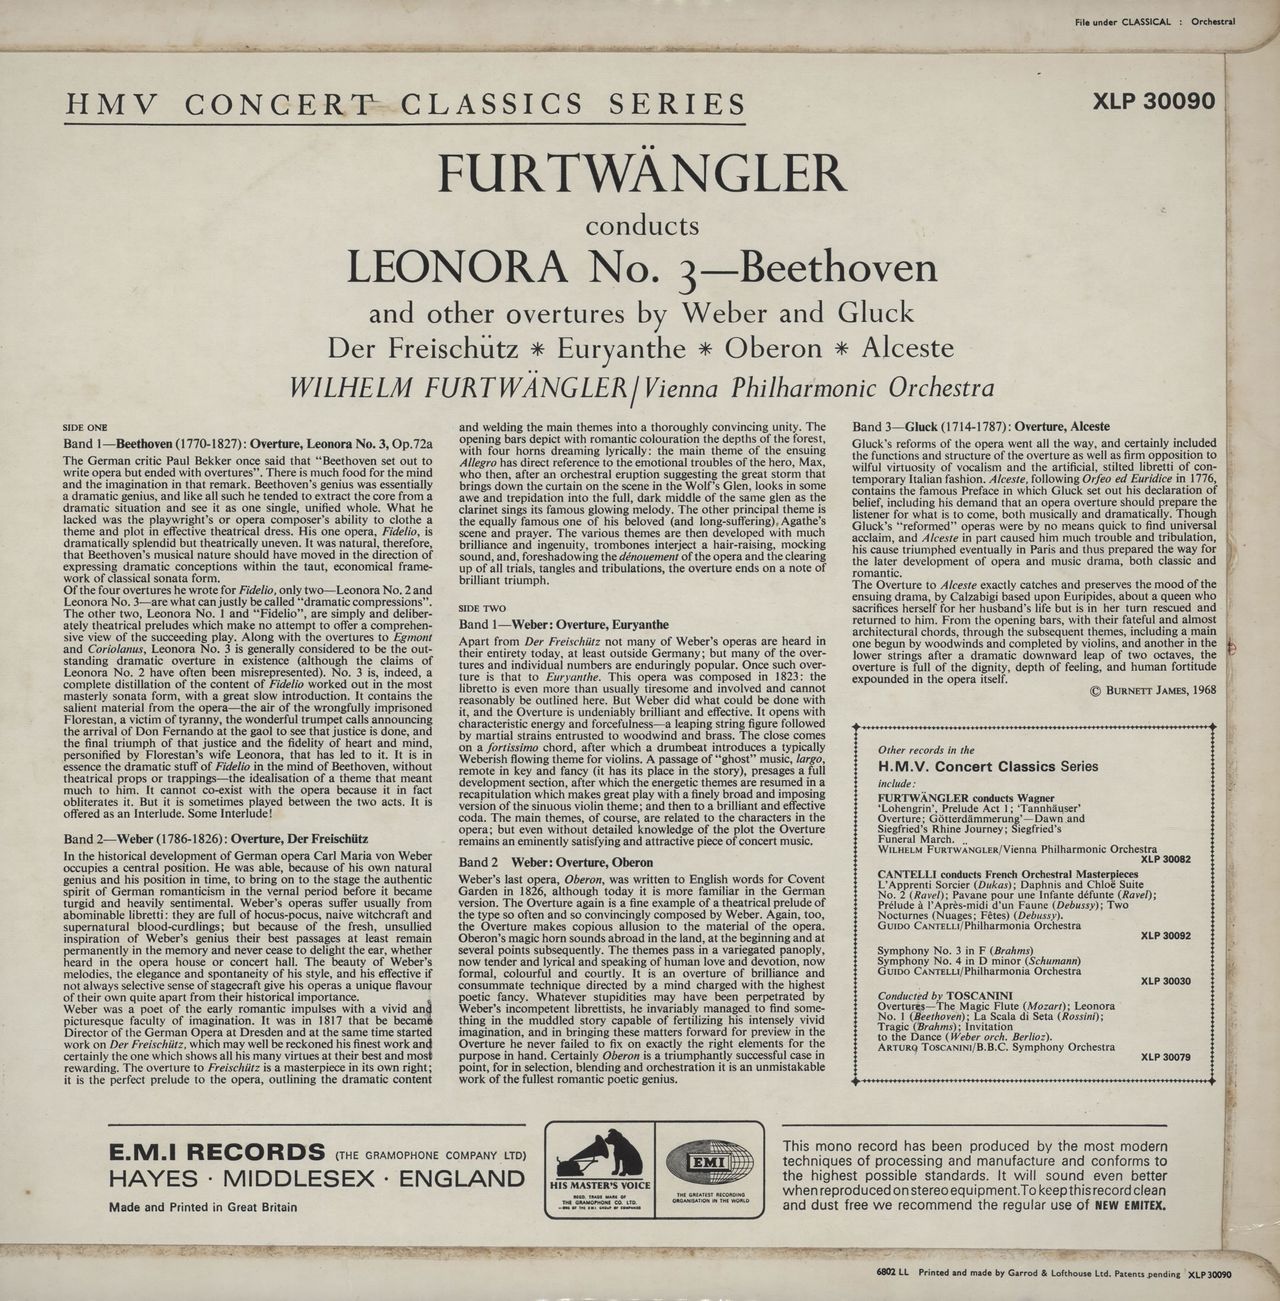 Vienna Philharmonic Orchestra Furtwängler Conducts Beethoven's Leonora No. 3 & Overtures by Weber & Glück UK vinyl LP album (LP record)